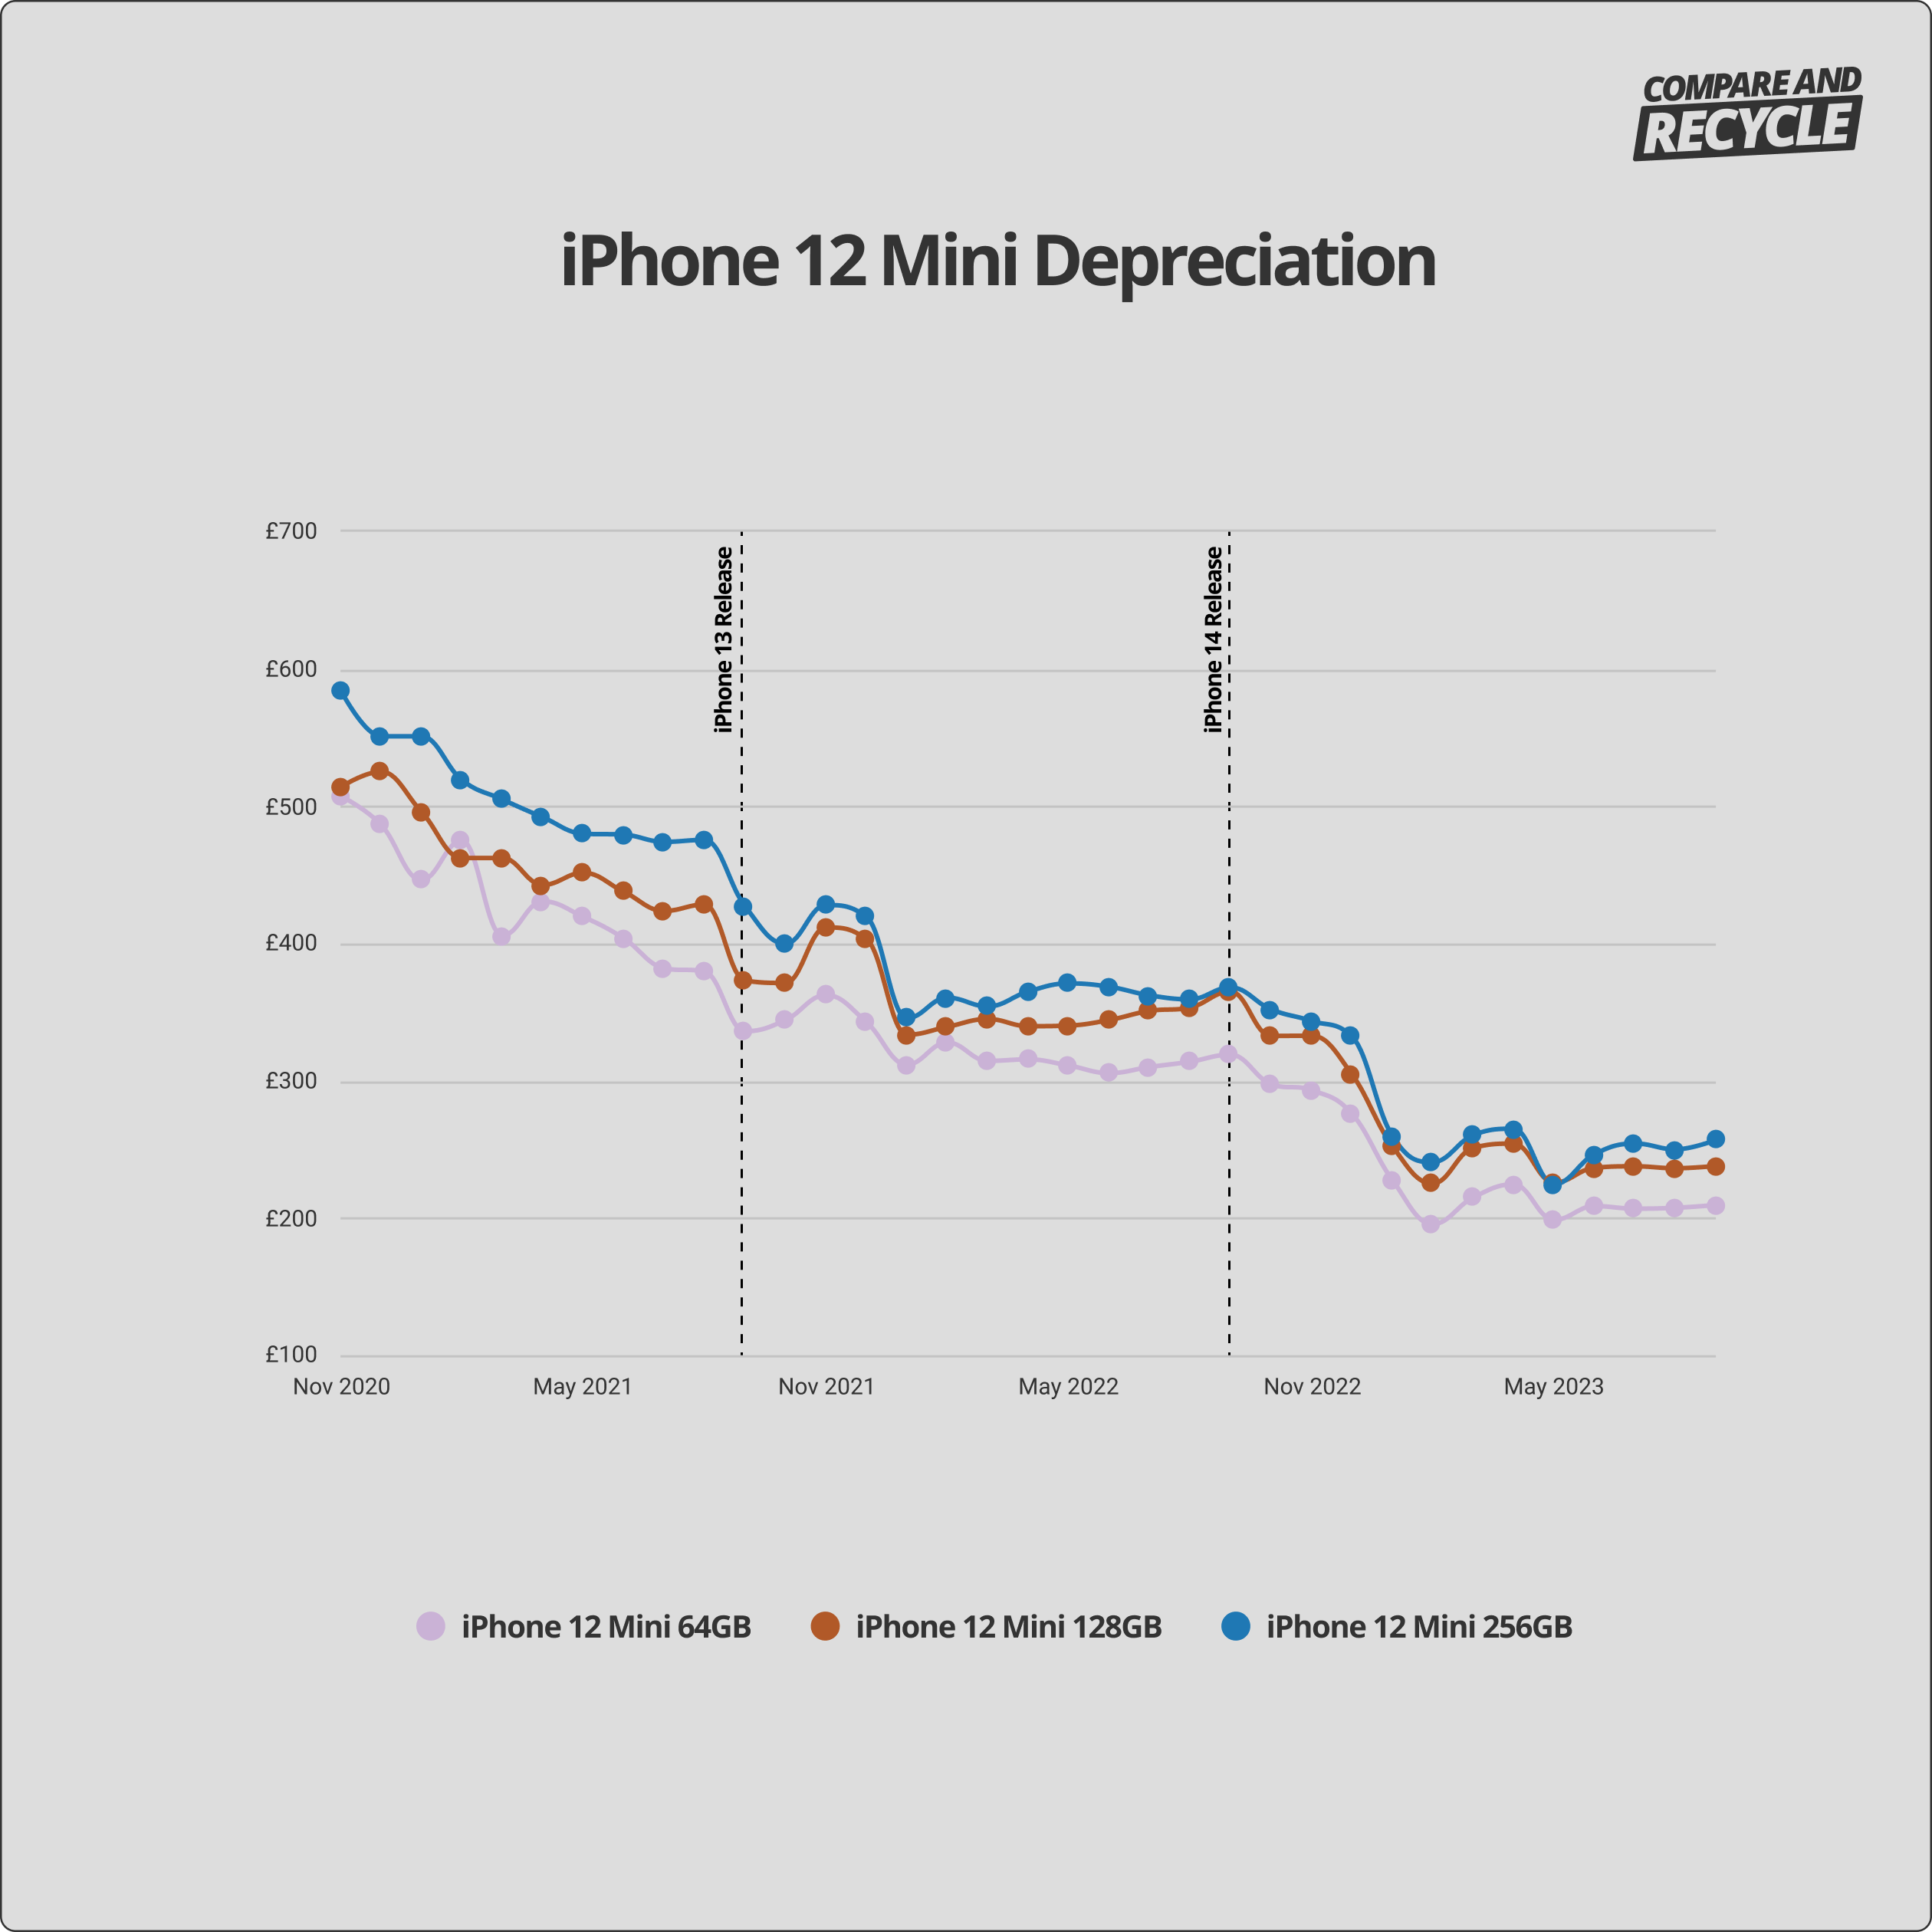 iPhone 12 Mini depreciation graph